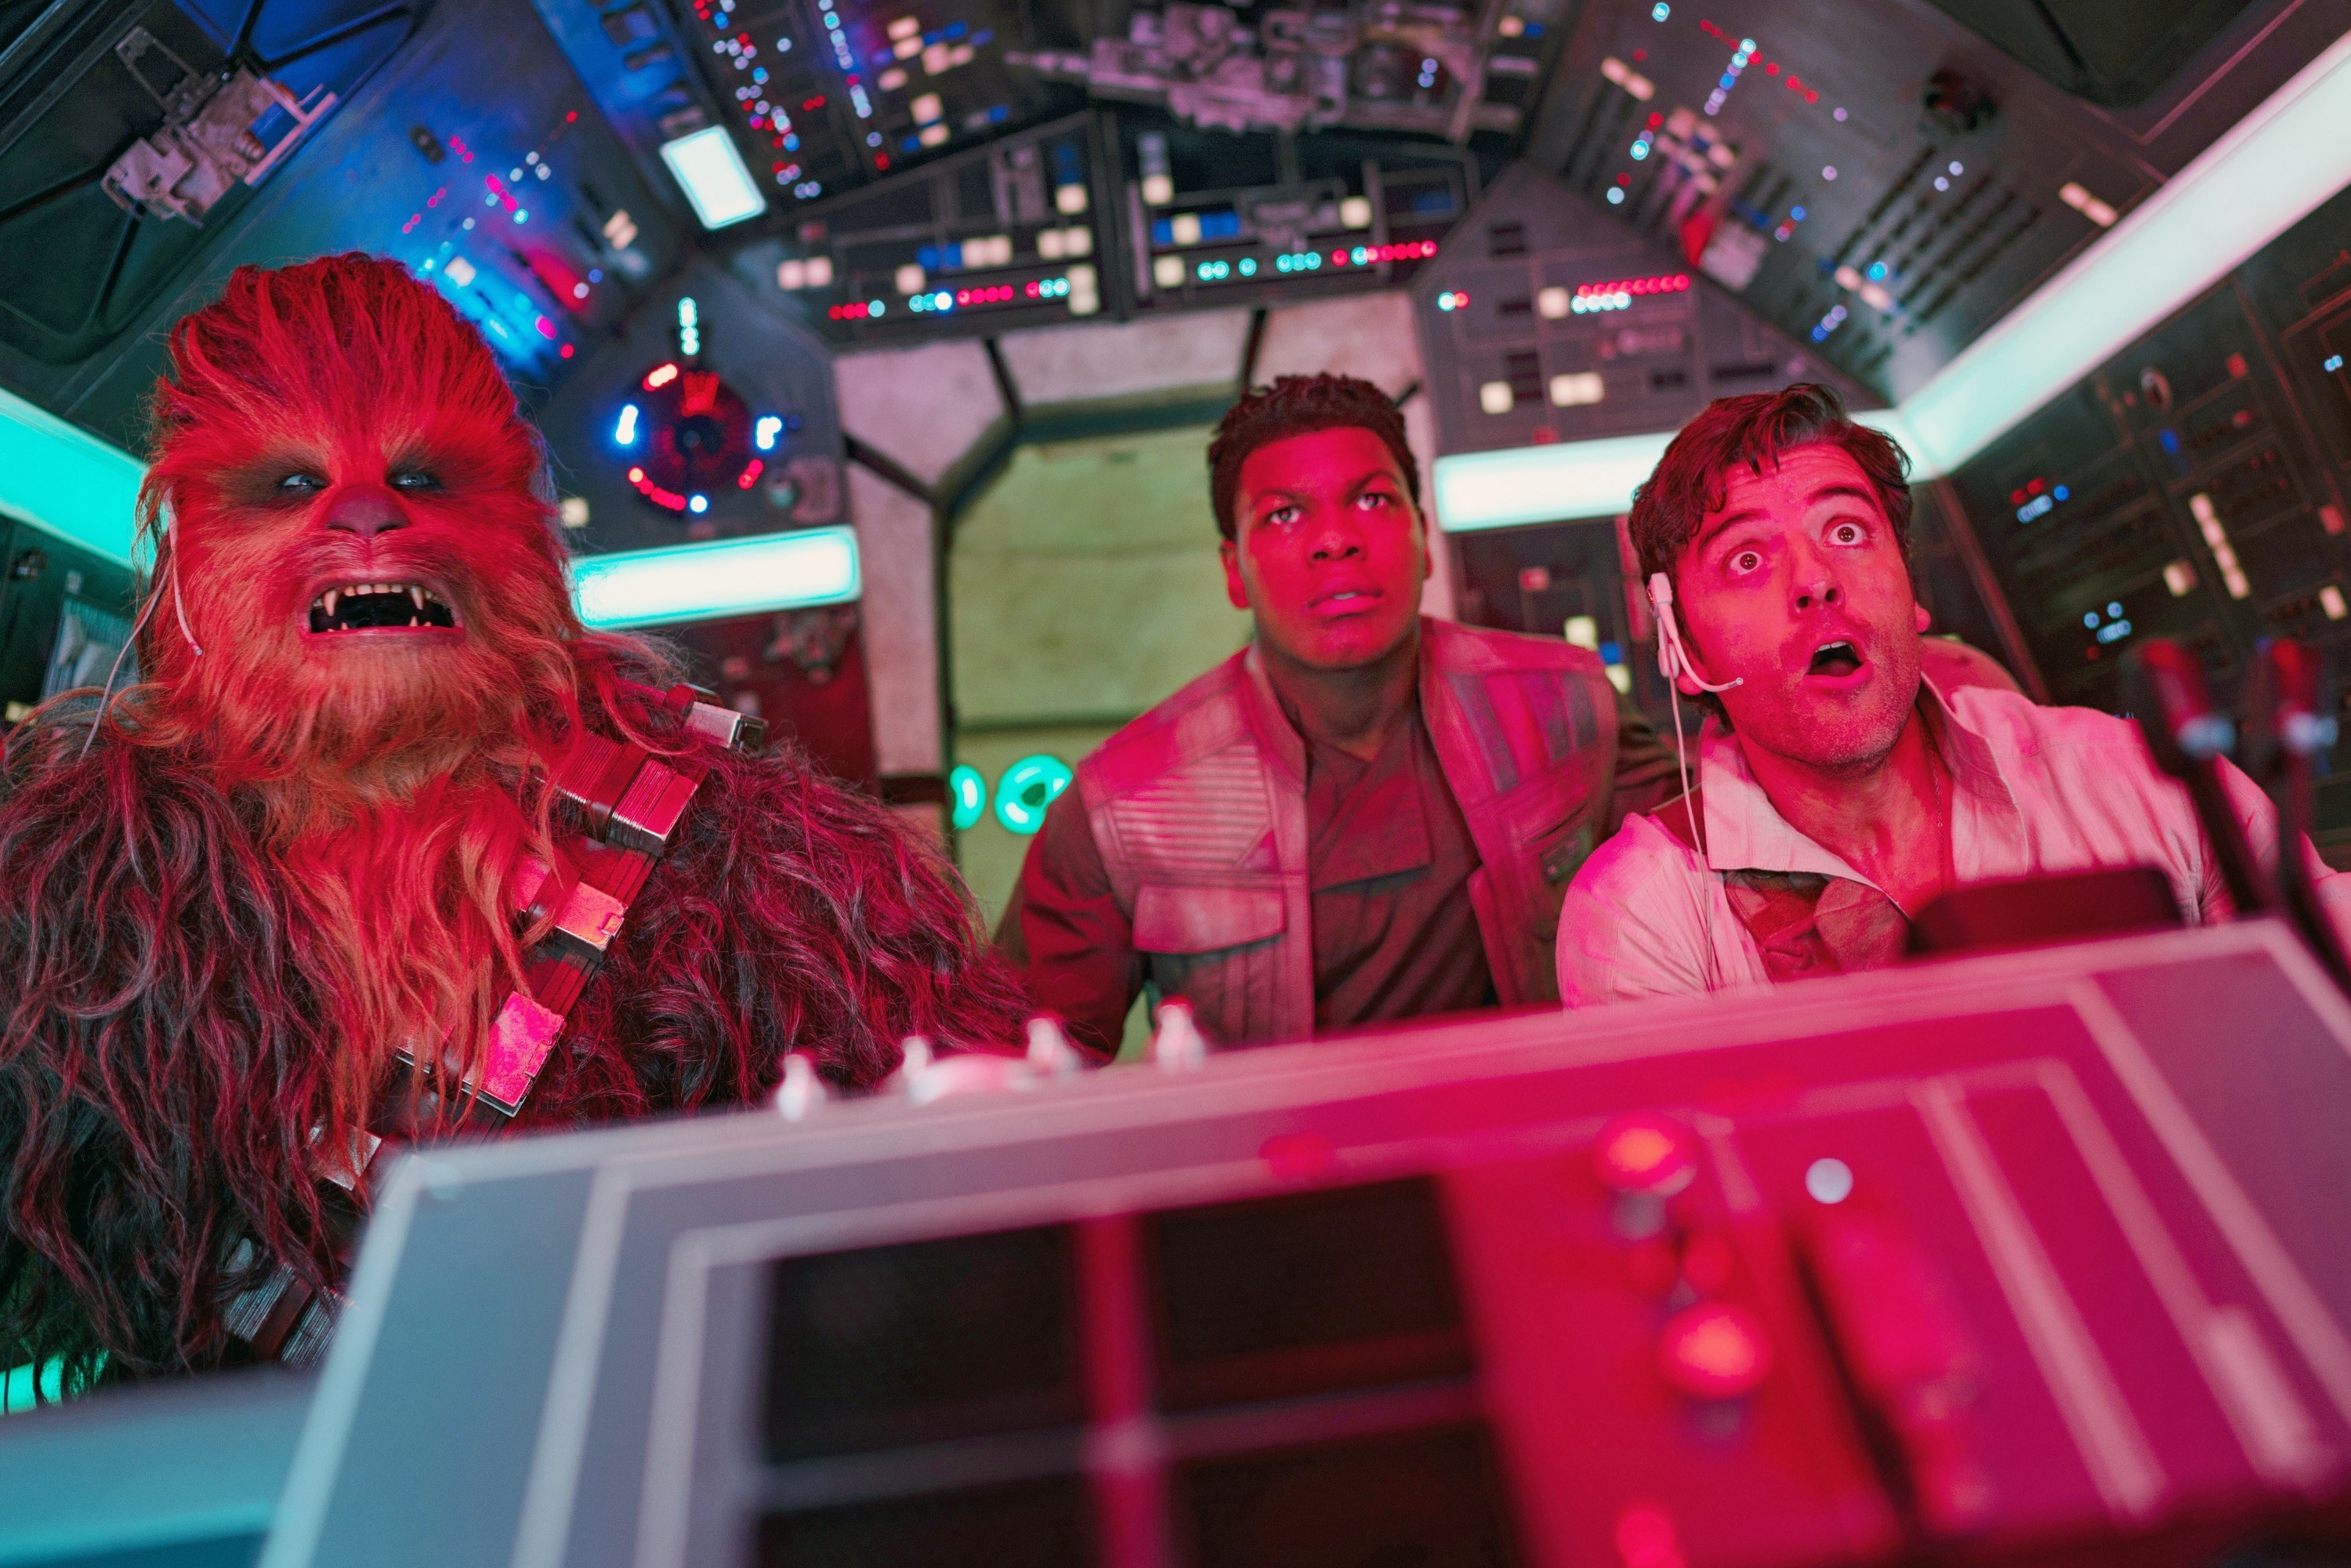 Joonas Suotamo as Chewbacca, John Boyega as Finn and Oscar Isaac as Poe Dameron in Star Wars: Episode IX — The Rise of Skywalker